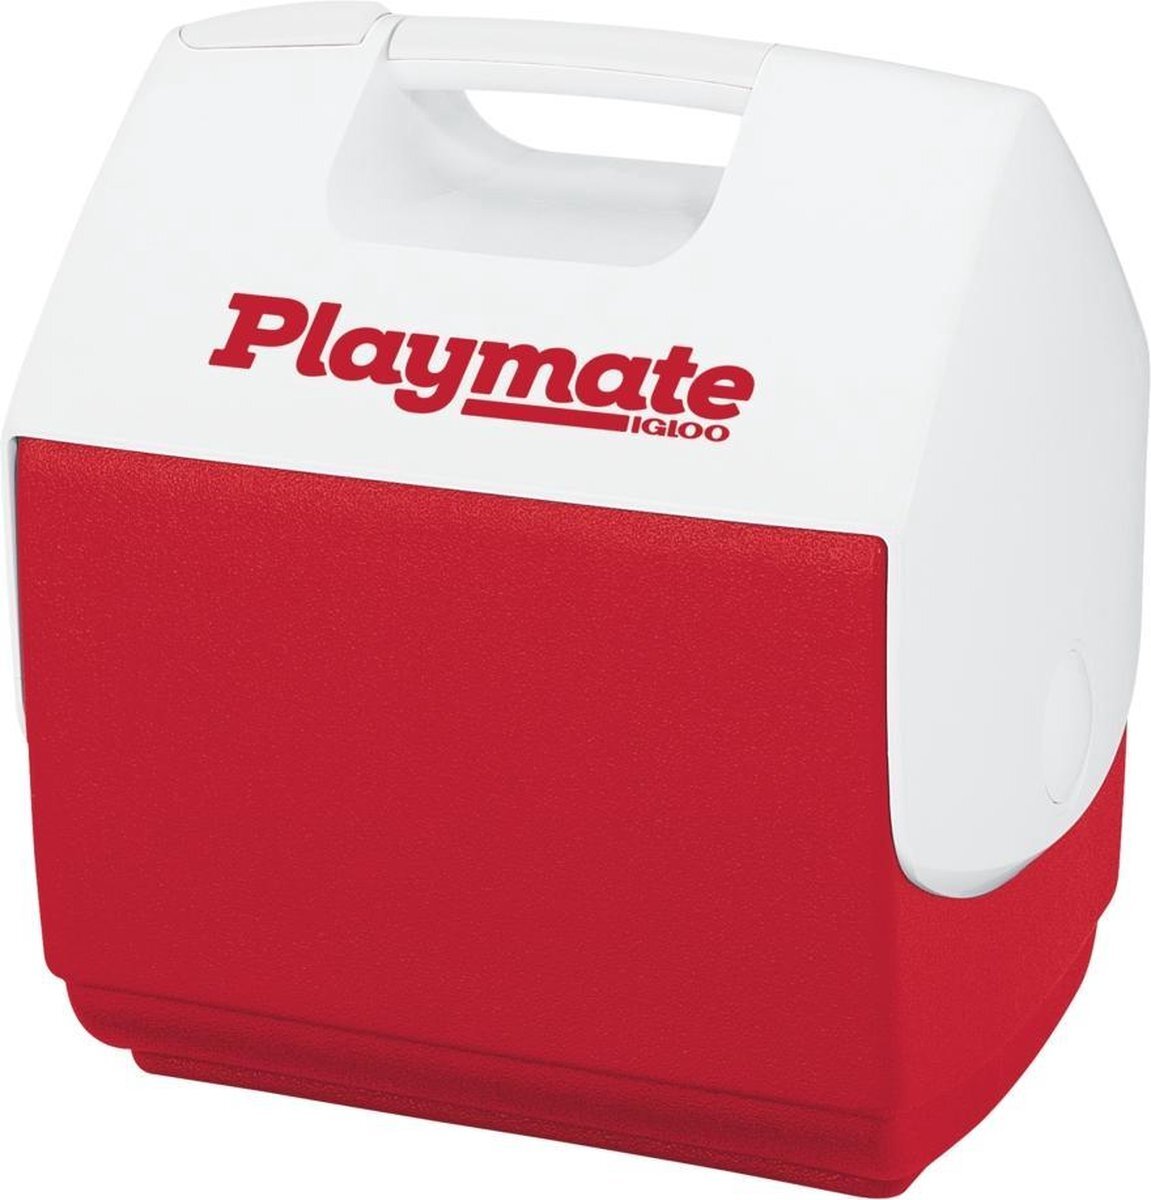 Igloo Playmate Pal kleine koelbox - 6.6 Liter - Rood